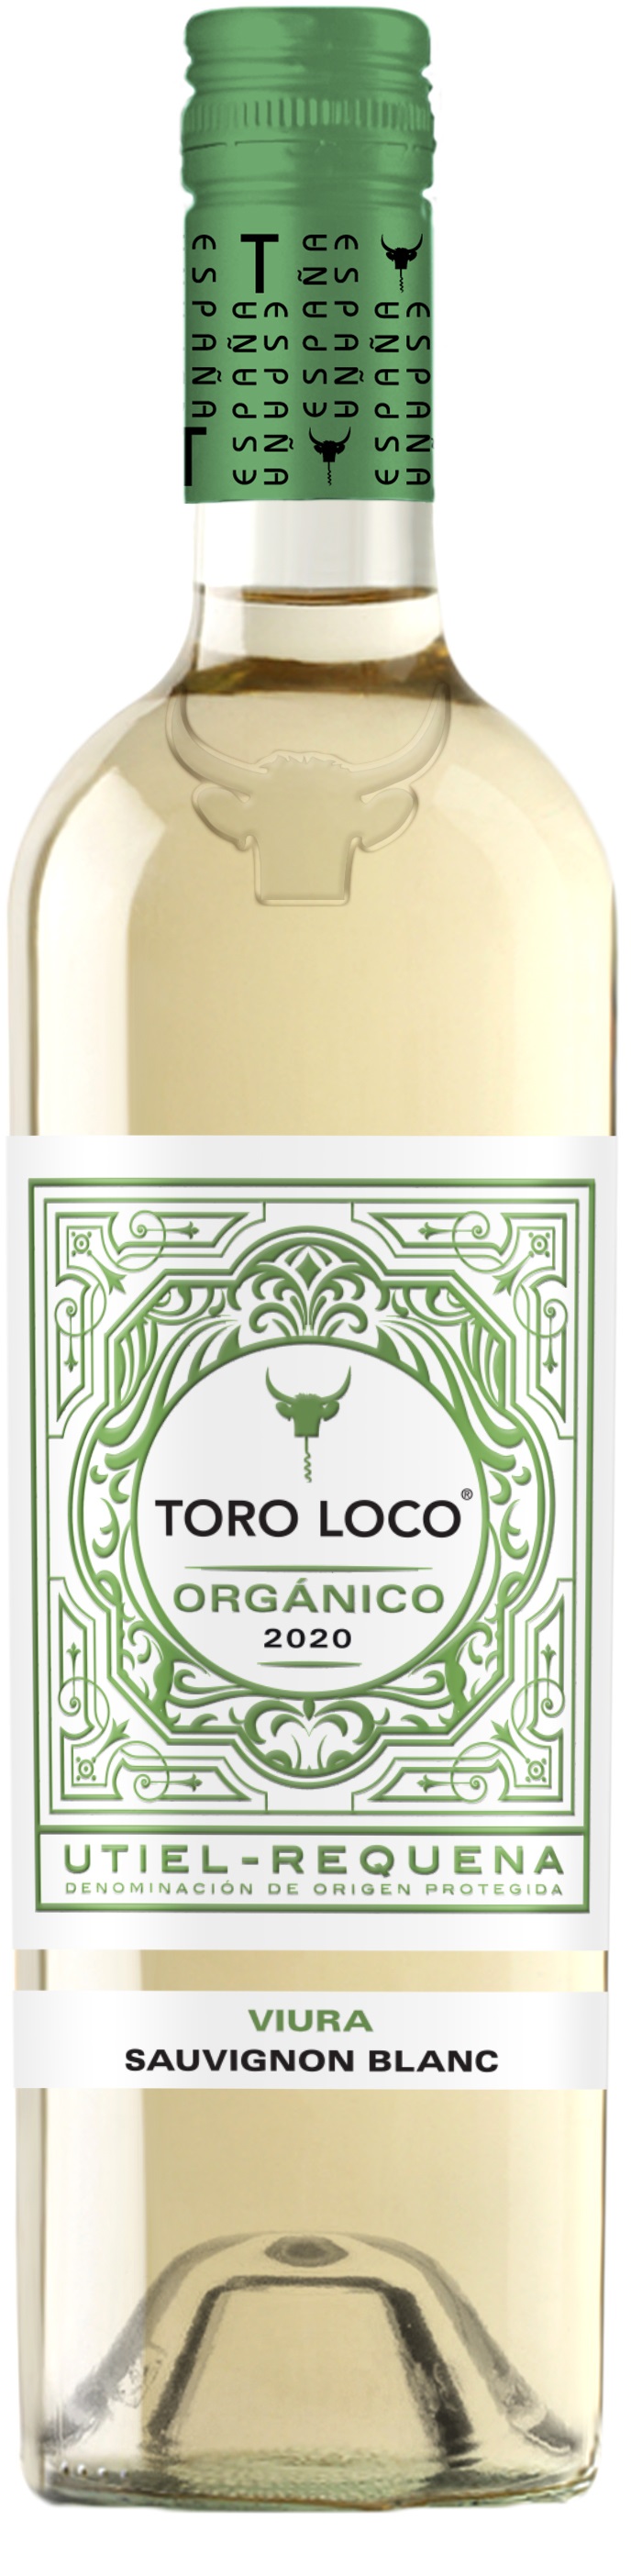 toro-loco-organico-viura-sauvignon-blanc-2020